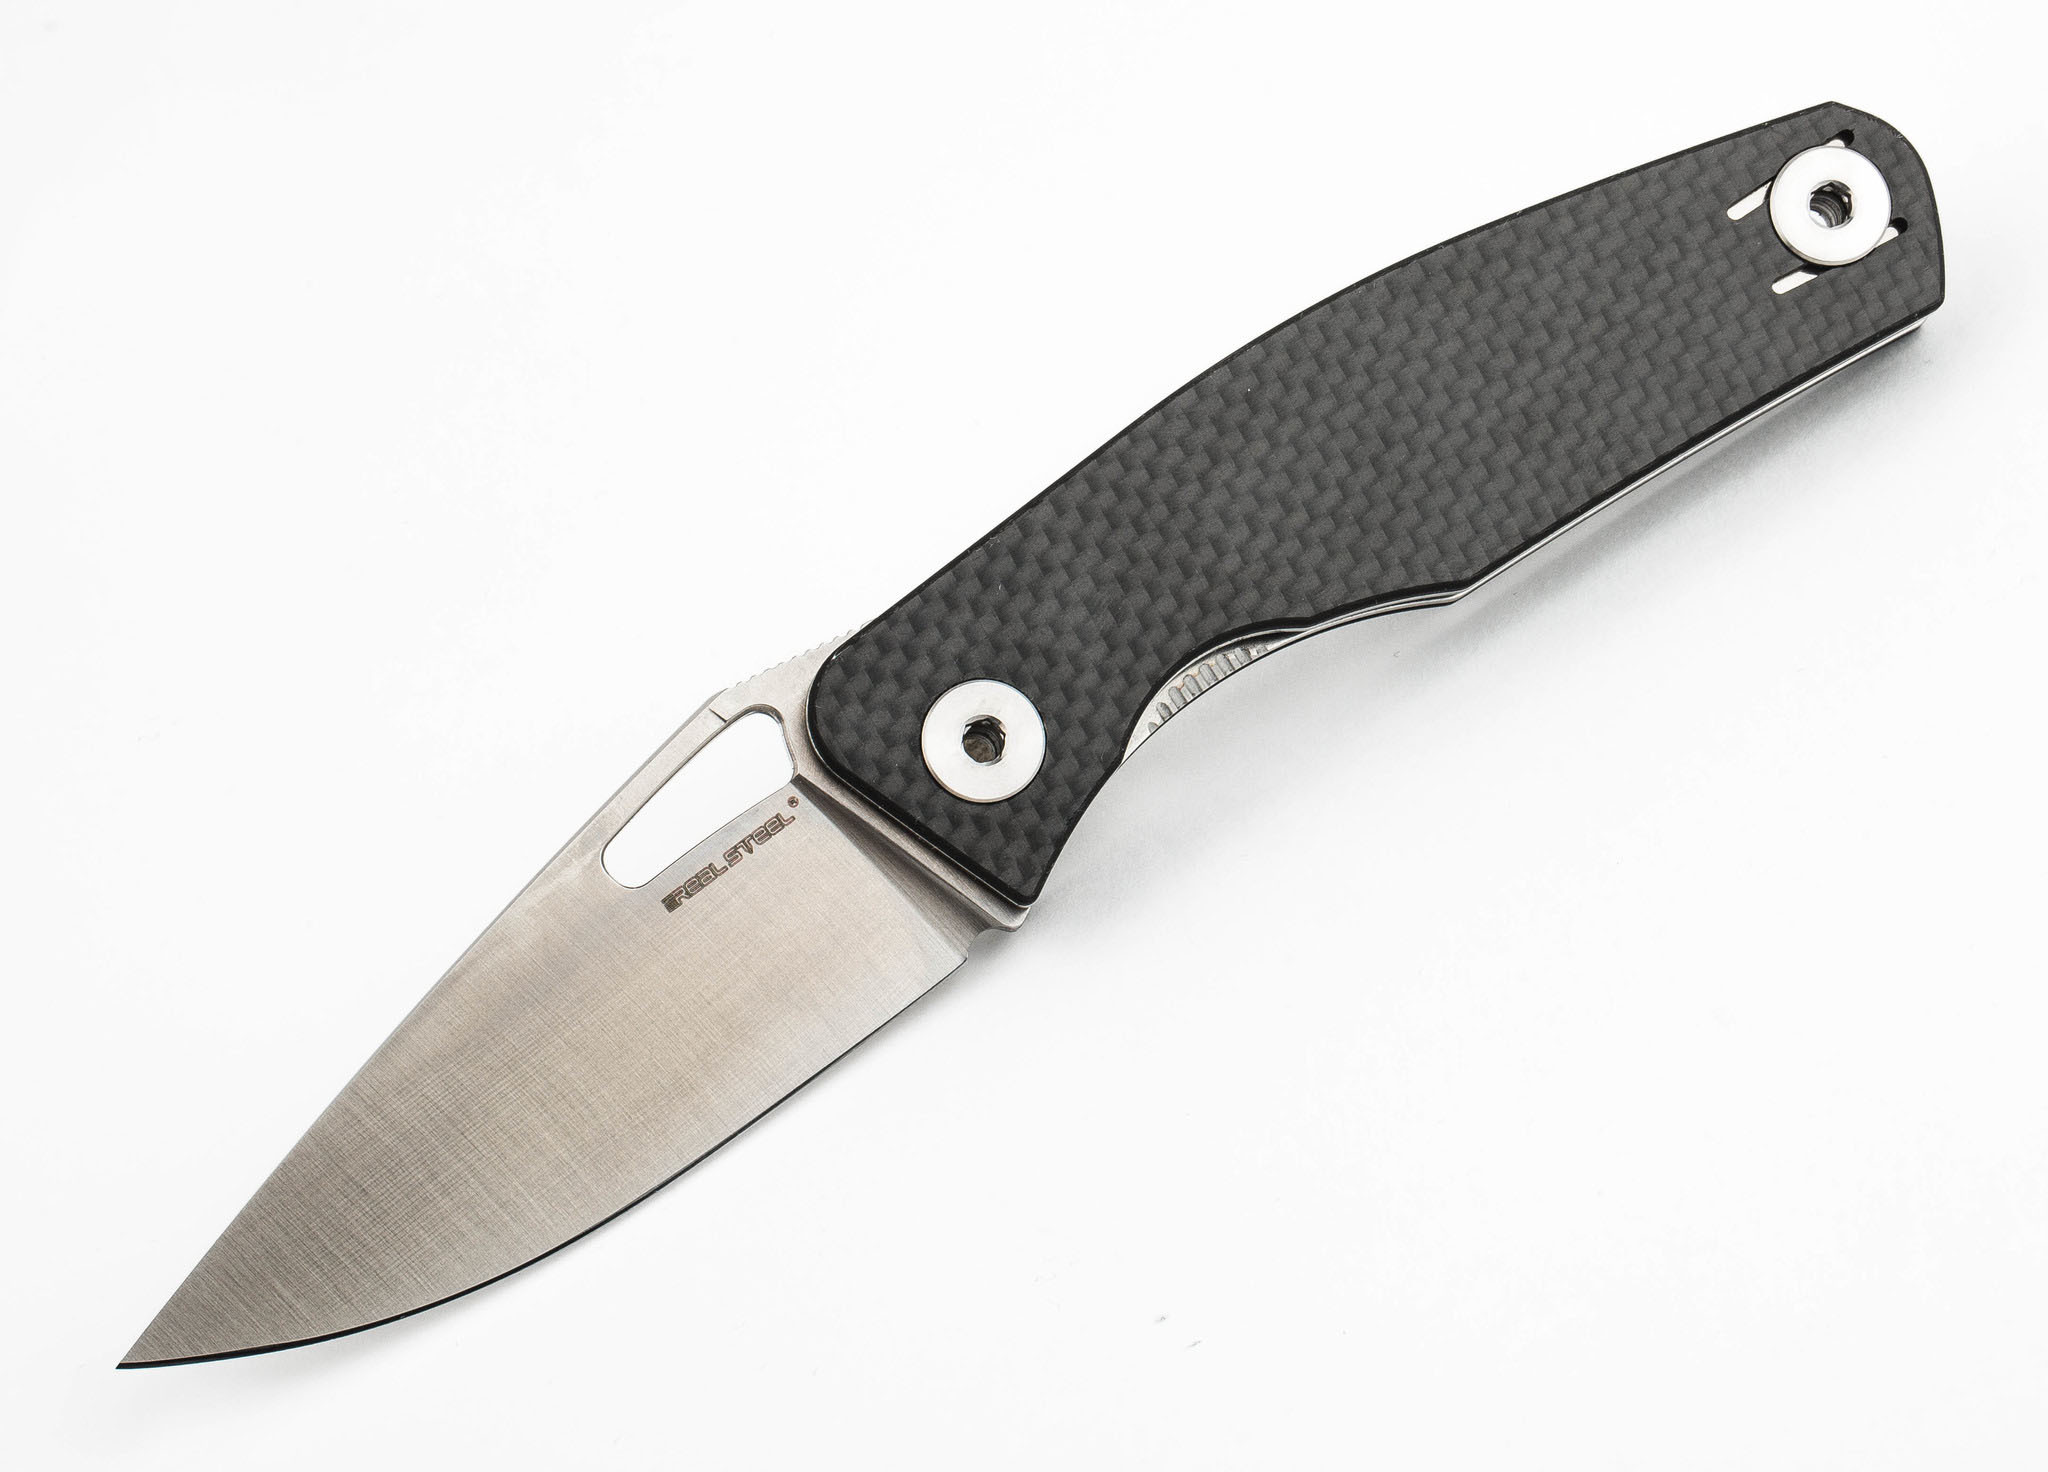  нож Terra, сталь 14C28N, 7454 по цене 4190.0 руб. -  в .